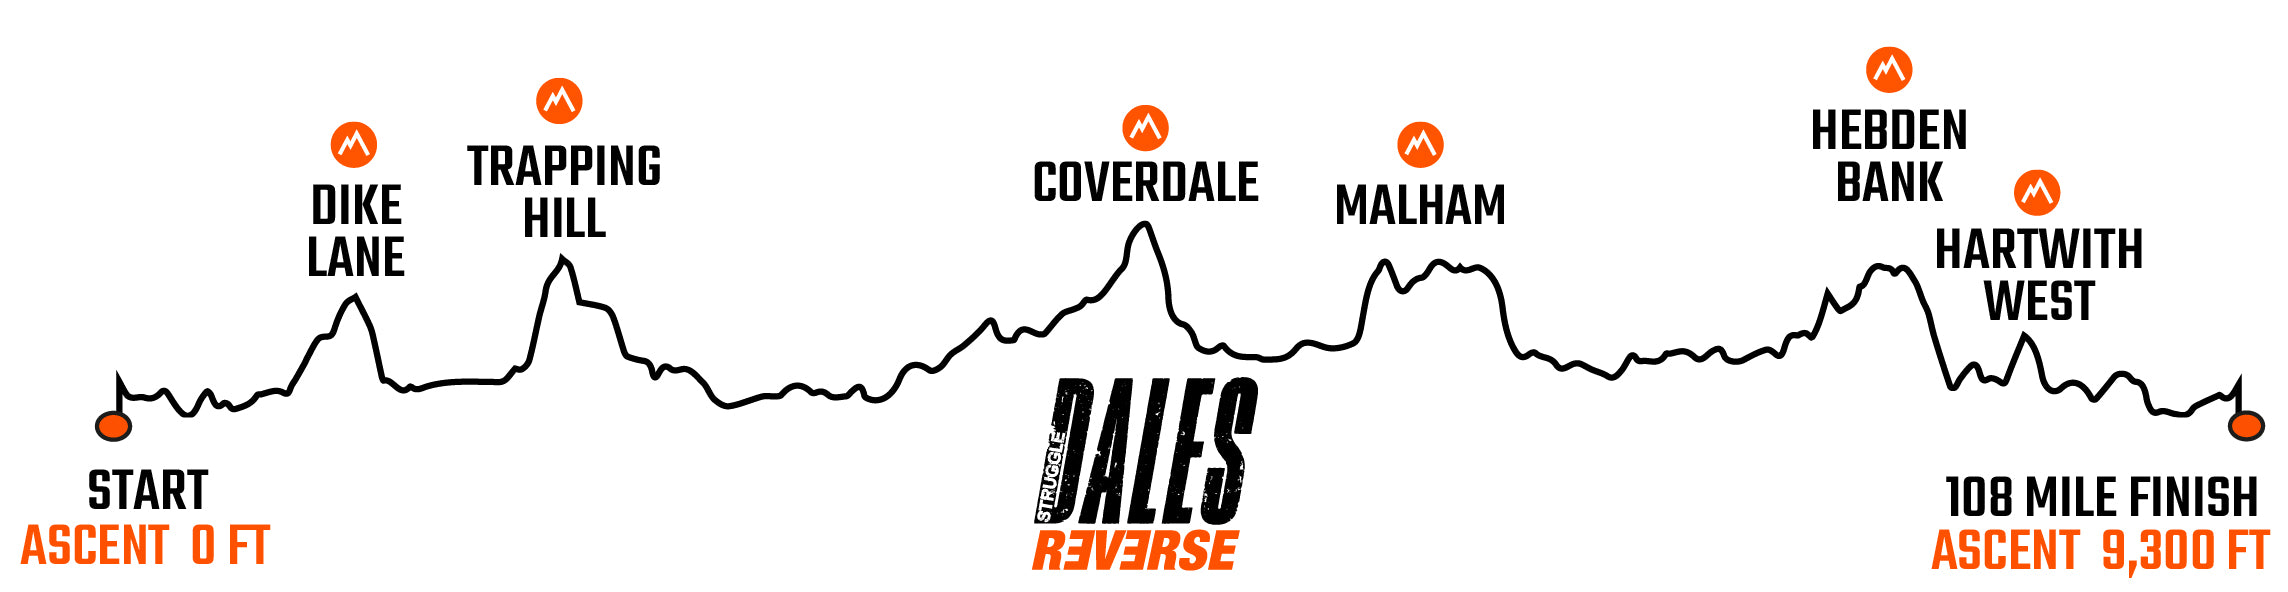 Struggle Dales sportive route elevation profile